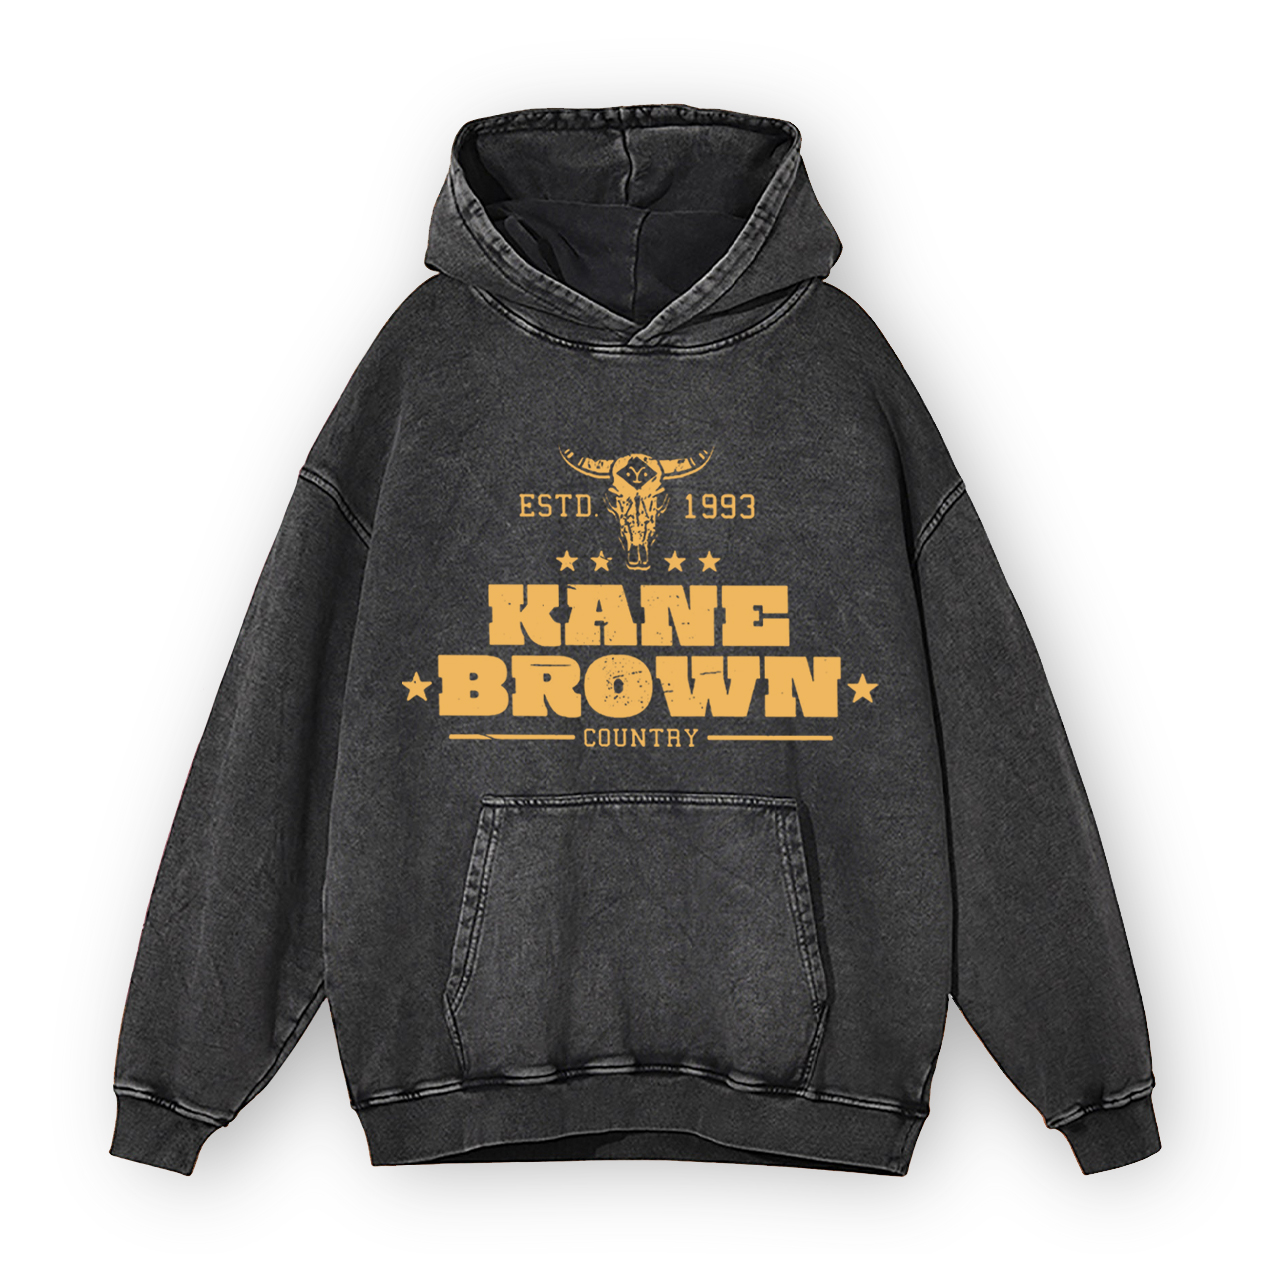 Kane Brown Country Music Bullhead Garment-Dye Hoodies